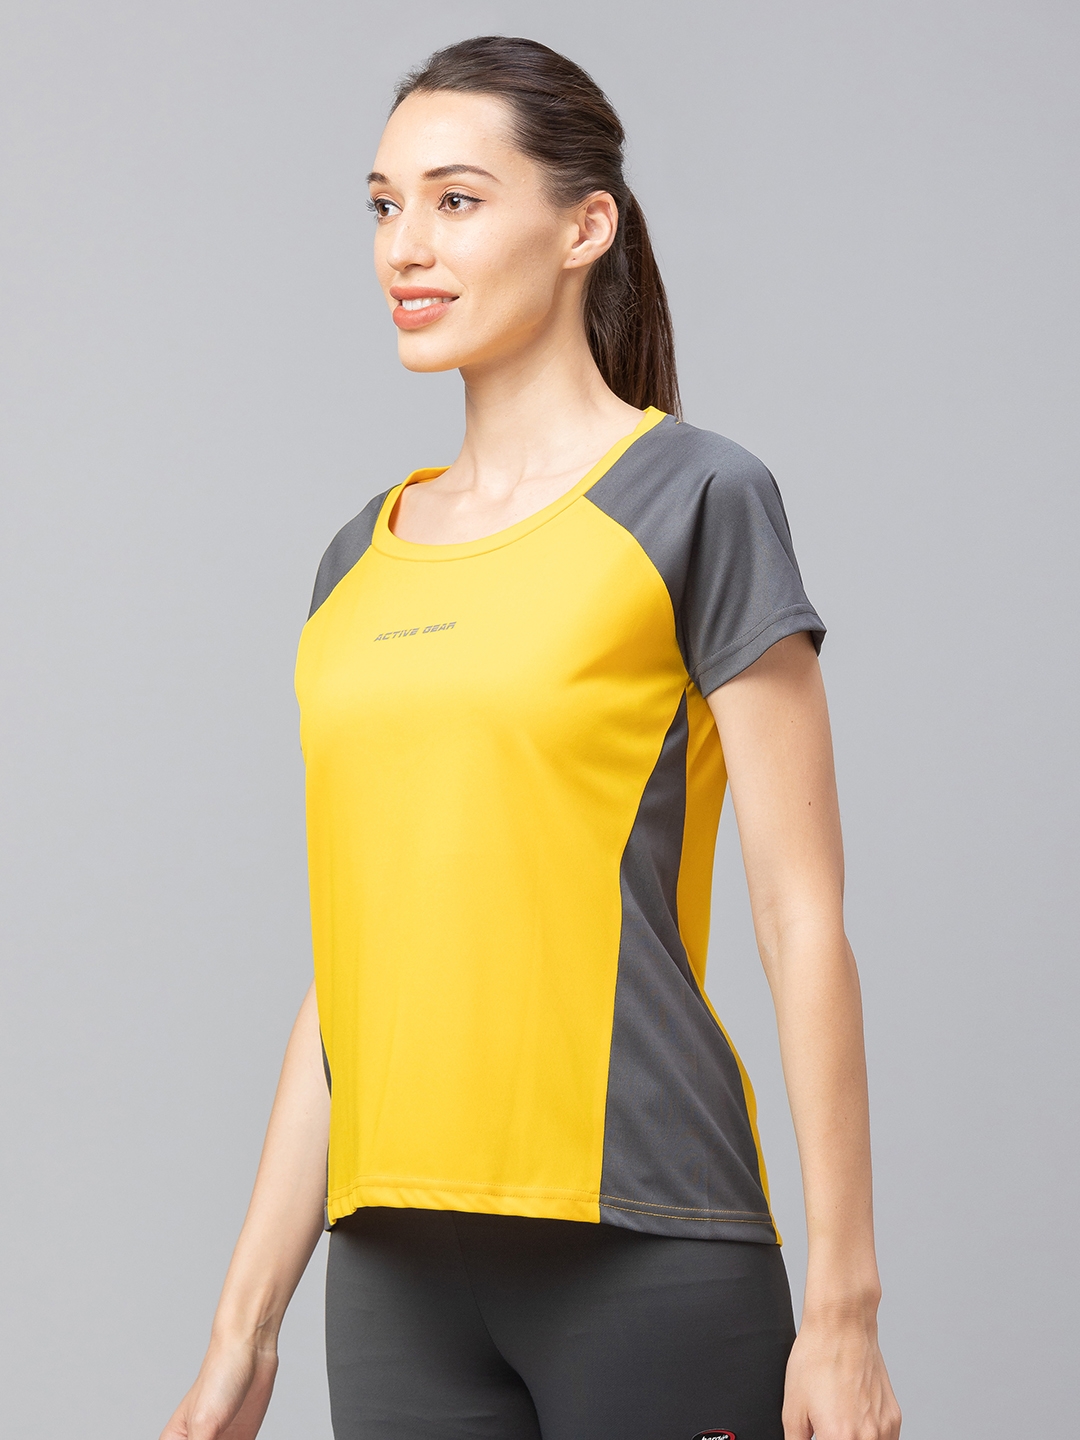 globus | Globus Yellow Colourblocked Tshirt 3